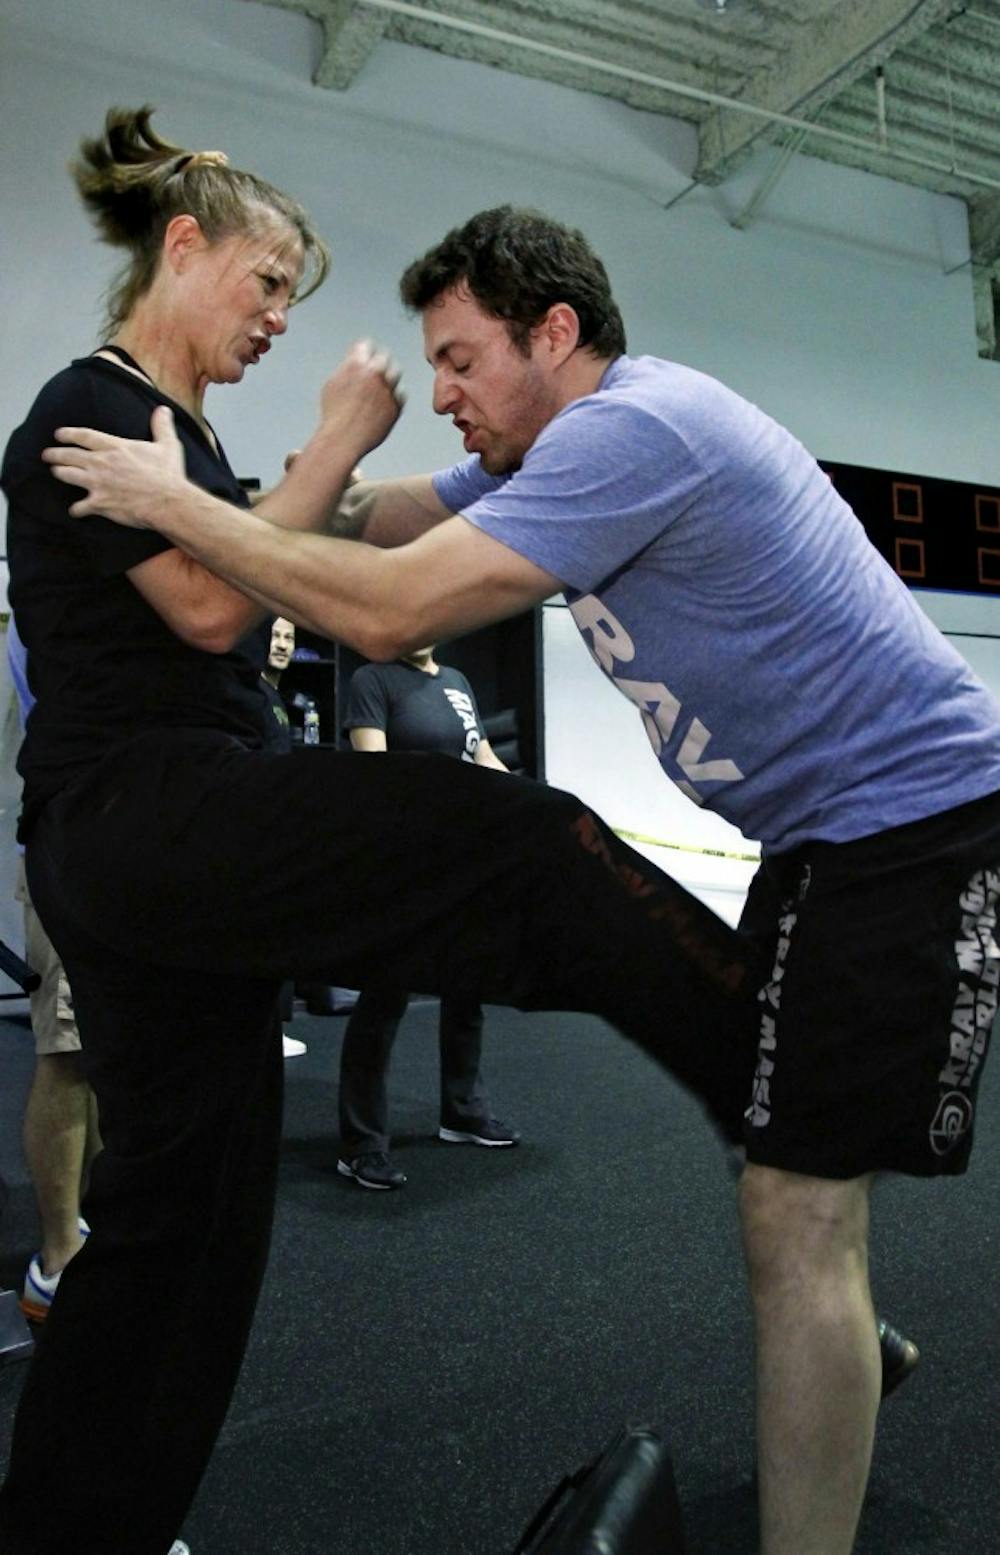 Lead instructor Kelly Campbell, left, demonstrates a groin kick against instructor Daniel Boluarte, in a Krav Maga self-defense class at KMW Training Center, December 15, 2010, in Santa Monica, California. (Ricardo DeAratanha/Los Angeles Times/MCT)